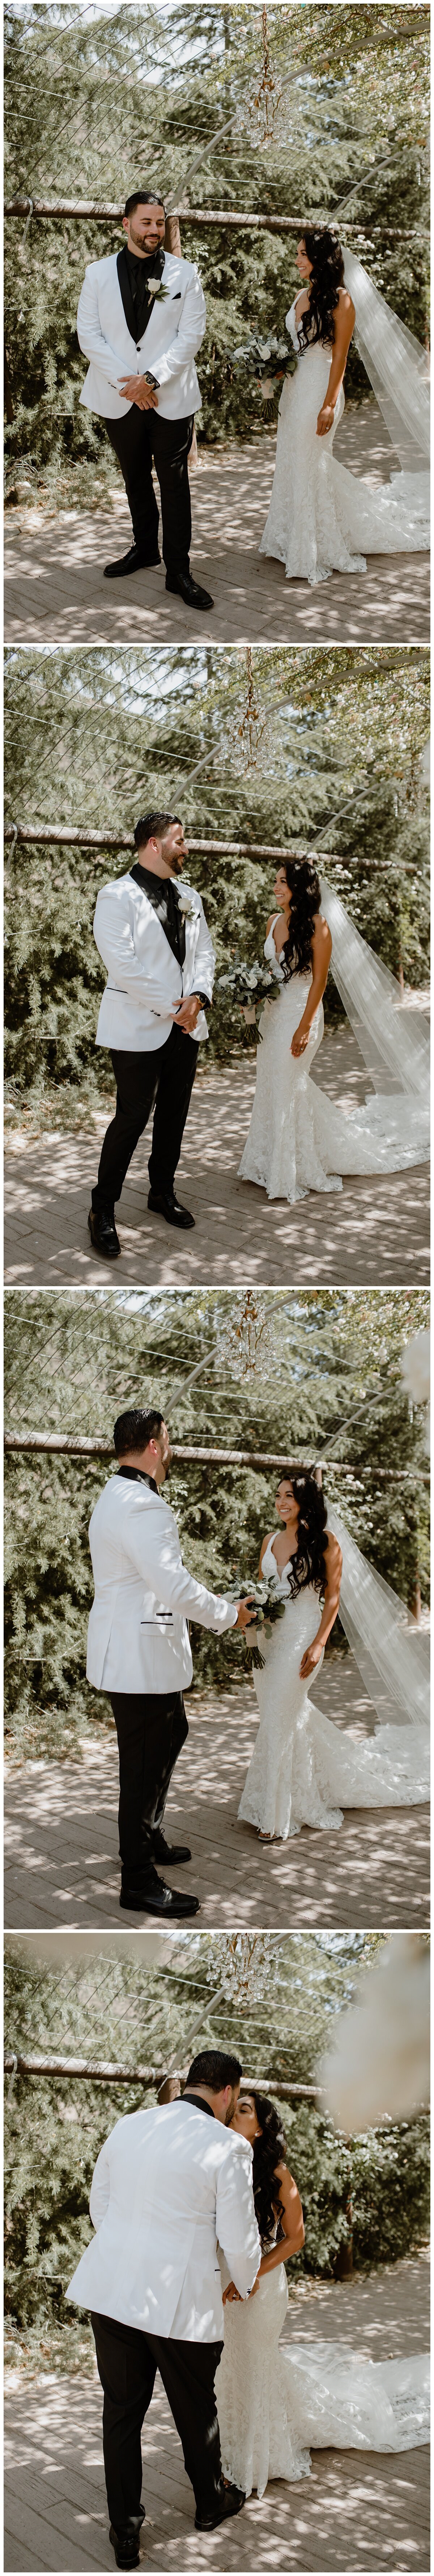 Serendipity Garden Weddings - Oak Glen, CA - Eve Rox Photography-42_WEB.jpg